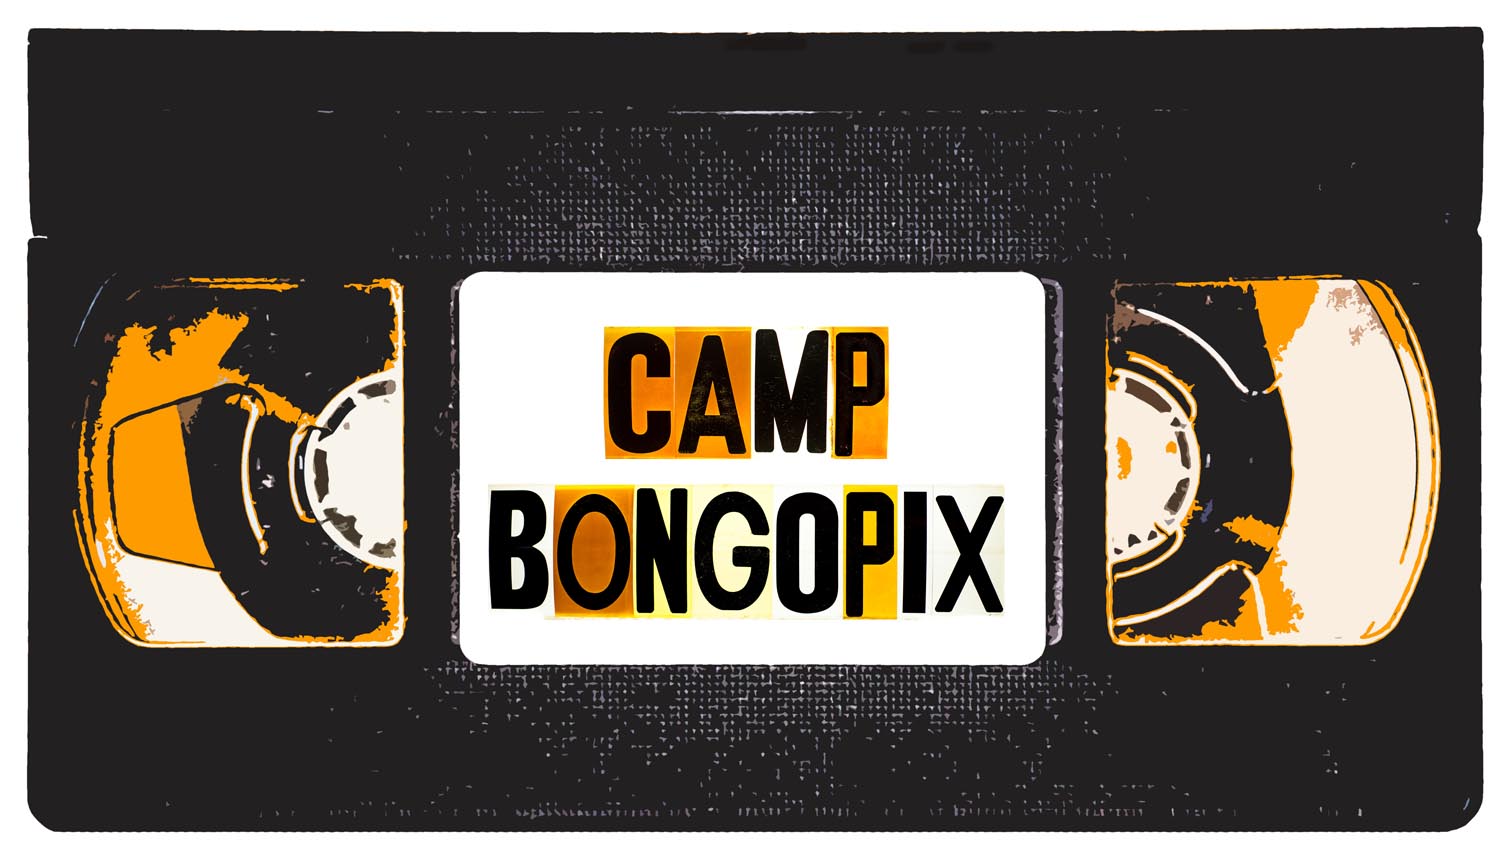 Camp Bongopix